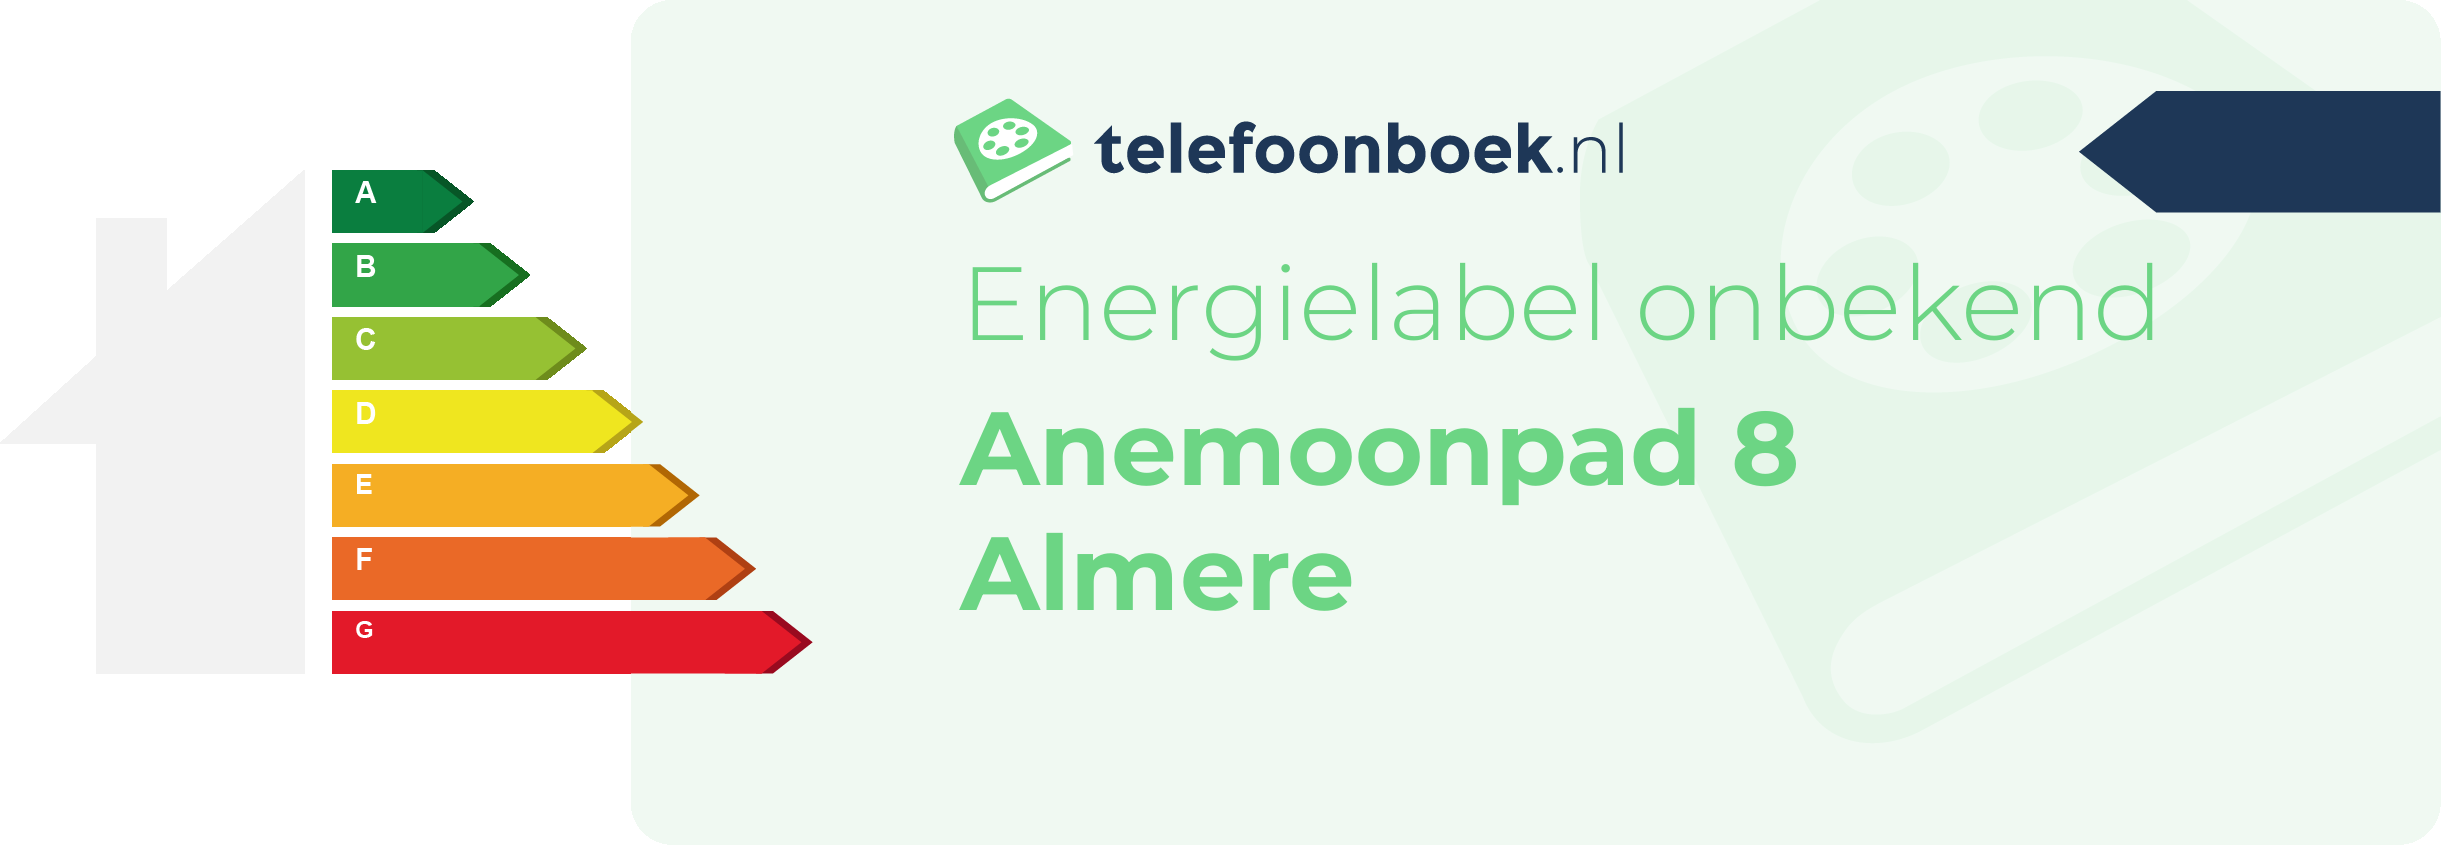 Energielabel Anemoonpad 8 Almere